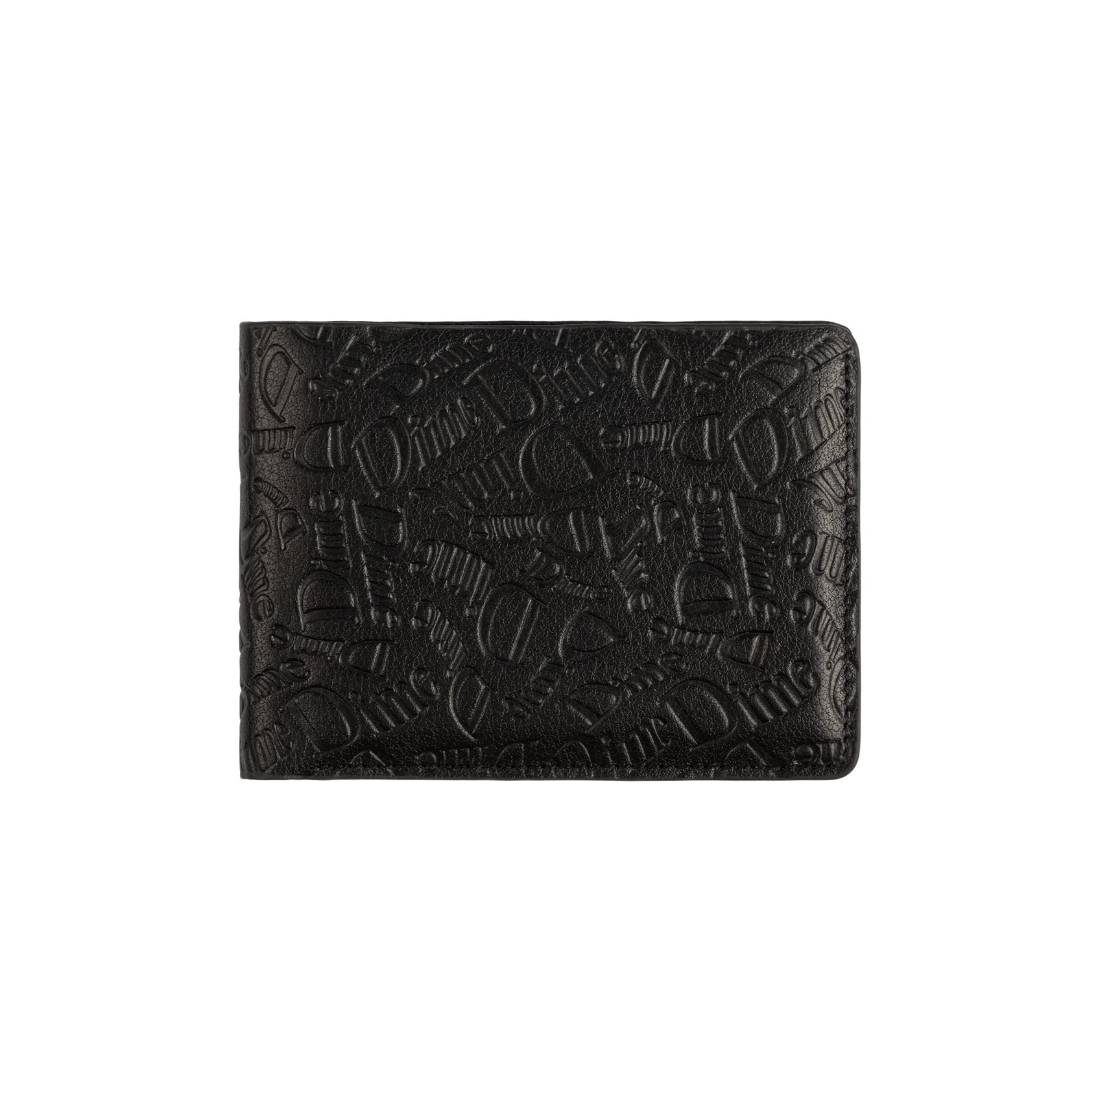 【Dime】Haha Leather Wallet - Black